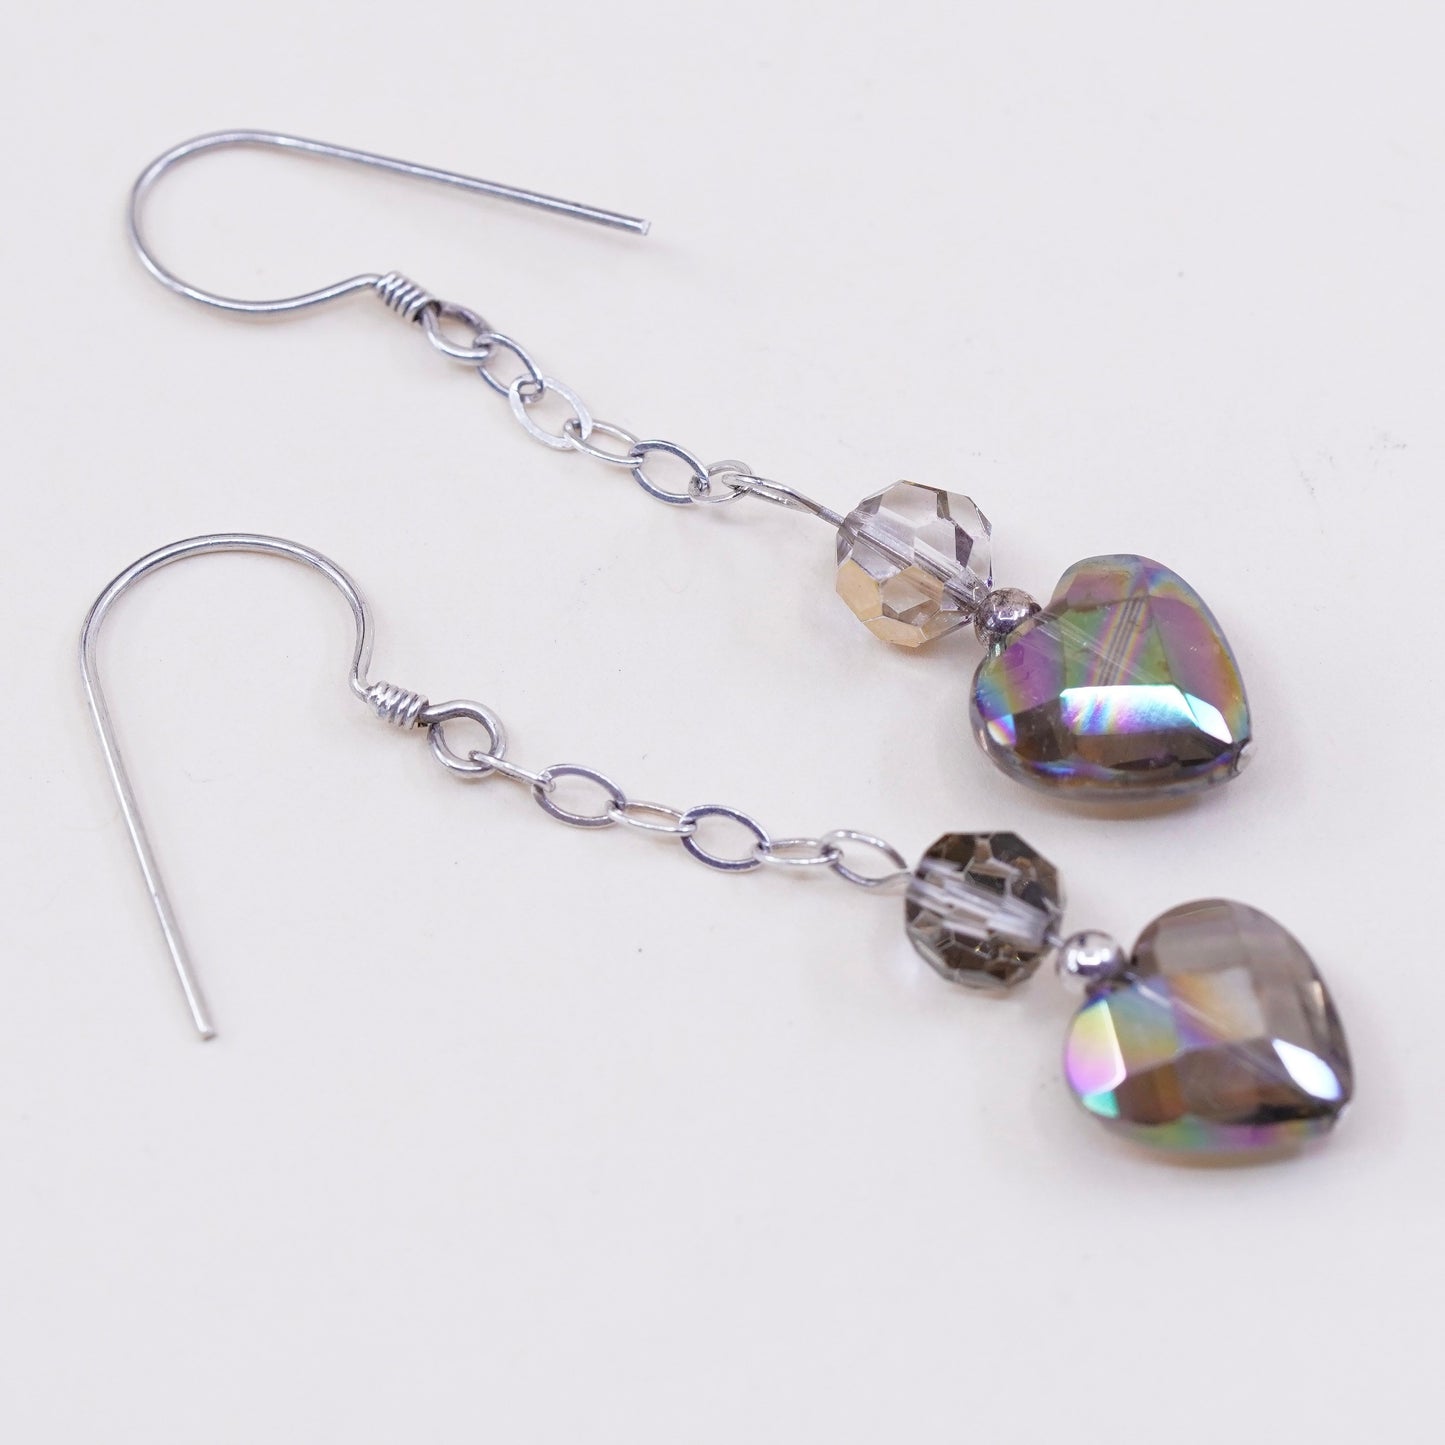 Vintage sterling 925 silver handmade earrings with heart crystal drops